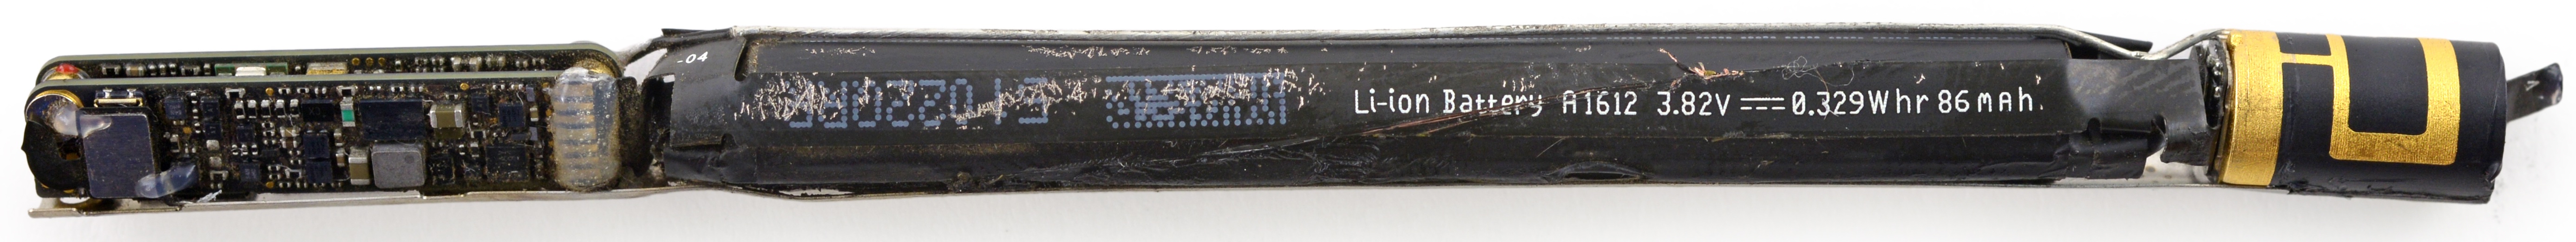 Apple Pencil battery iFixit teardown 001